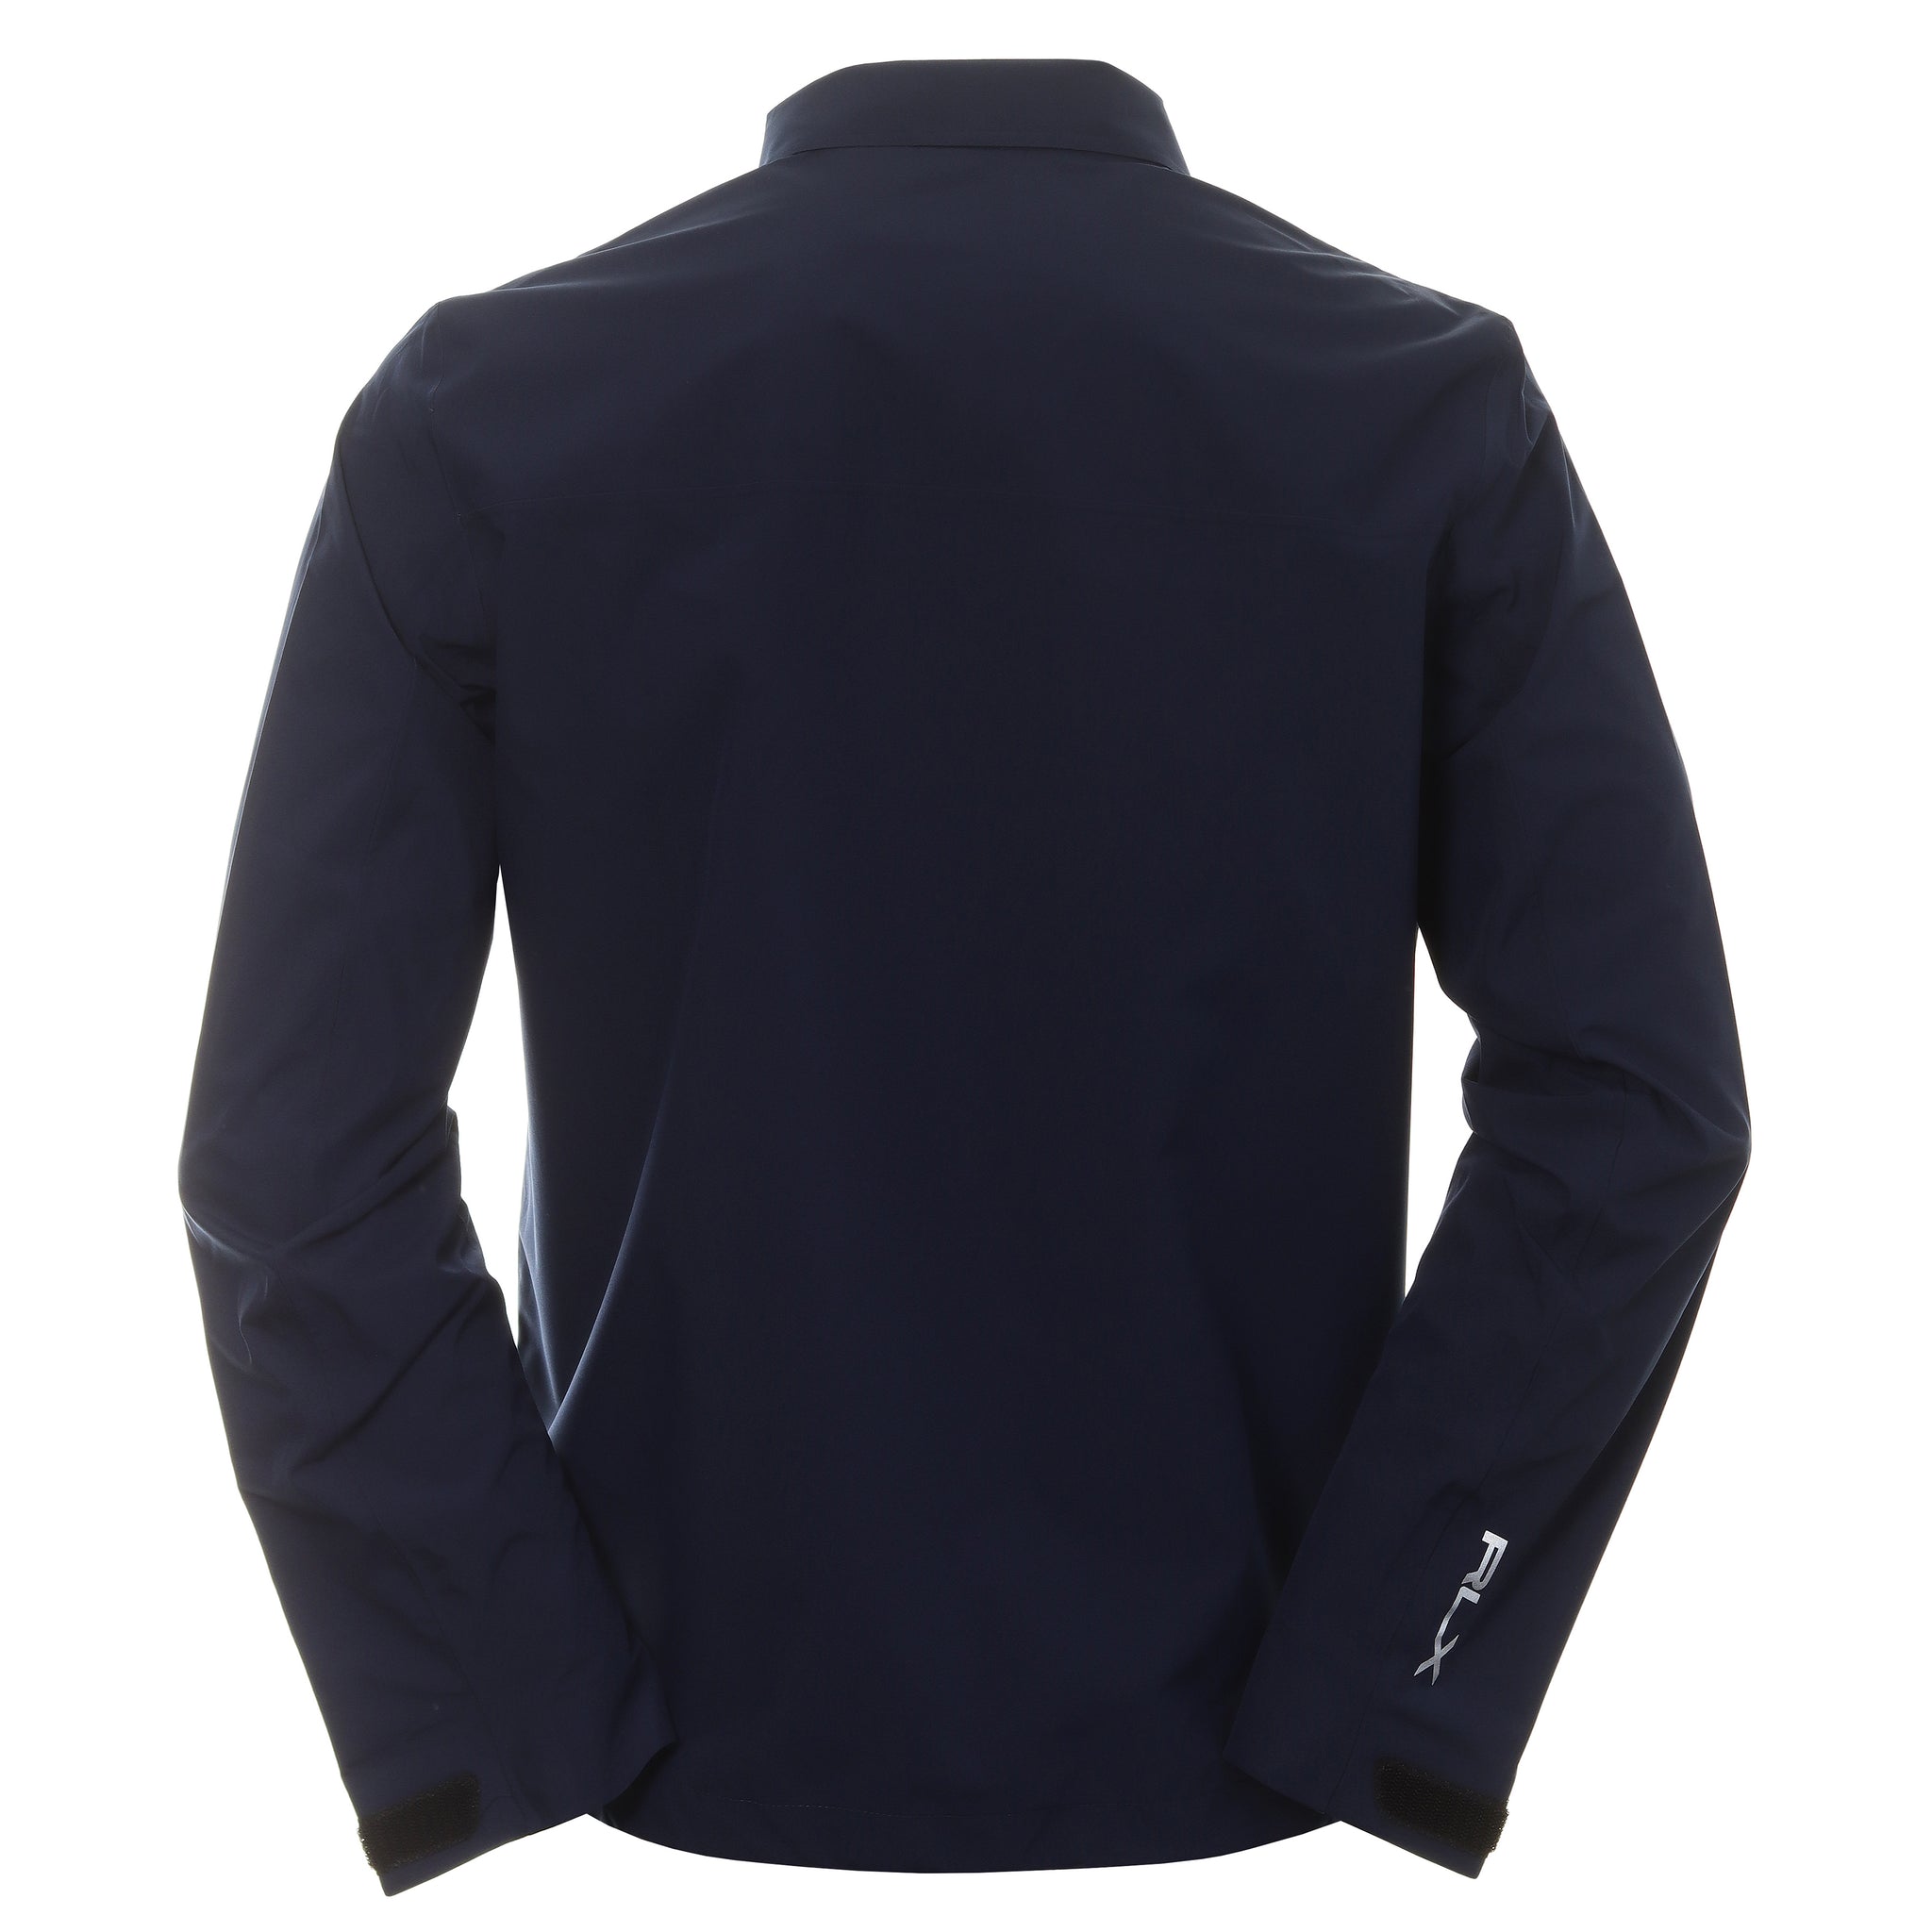 copy-of-rlx-ralph-lauren-ace-lined-windbreaker-jacket-785884450-french-navy-001-function18